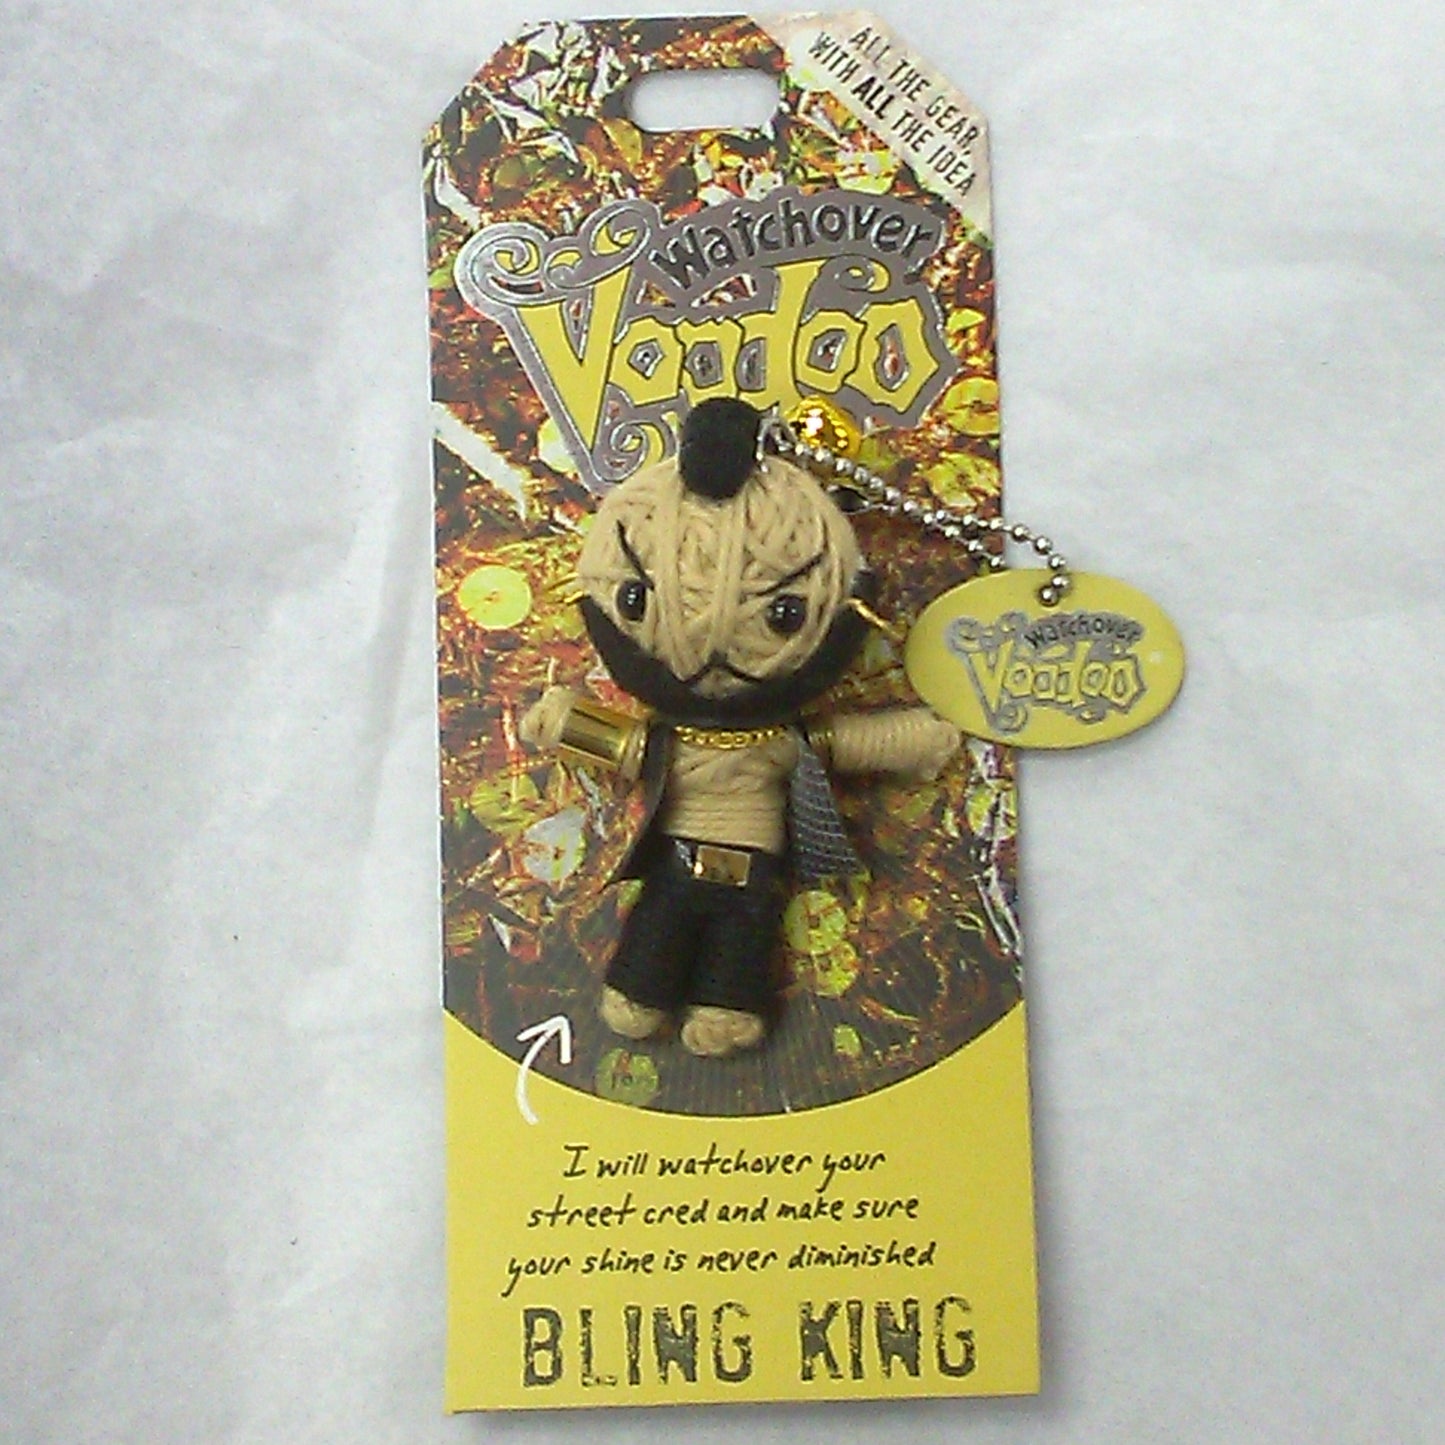 Voodoo keychain - Bling King